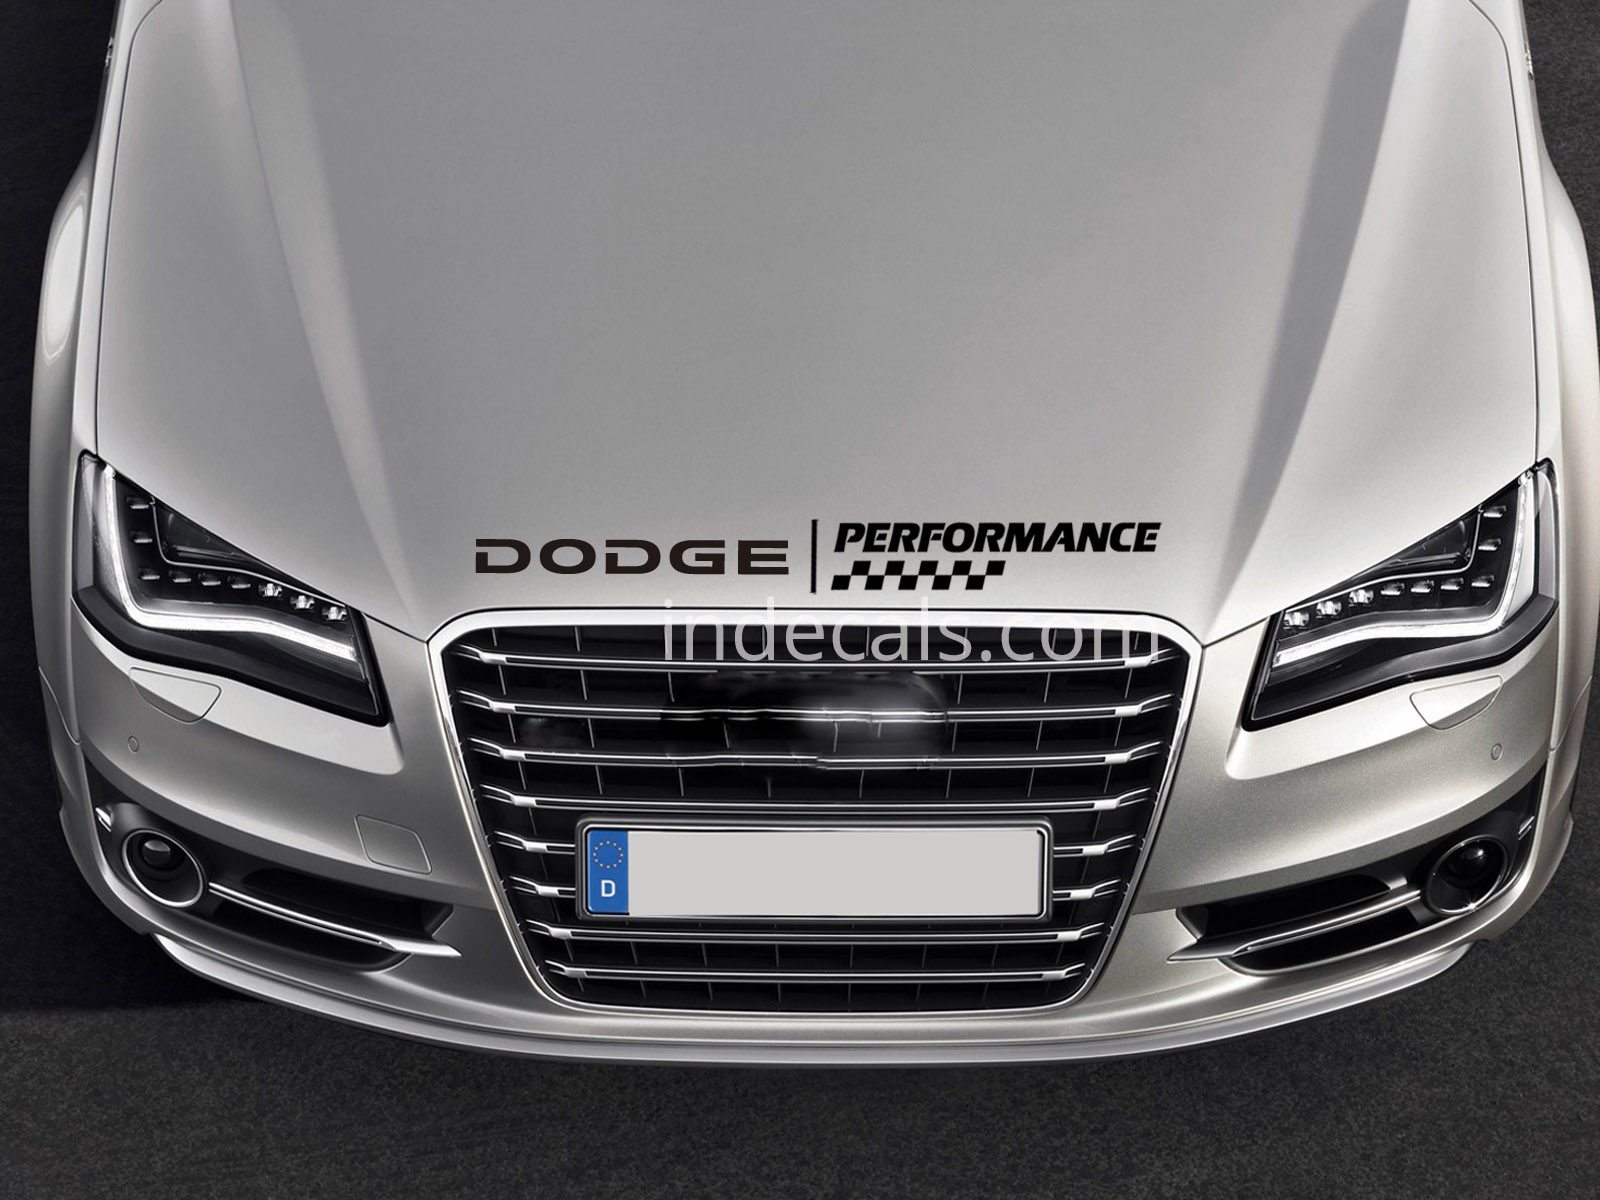 1 x Dodge Performance Sticker for Bonnet - Black